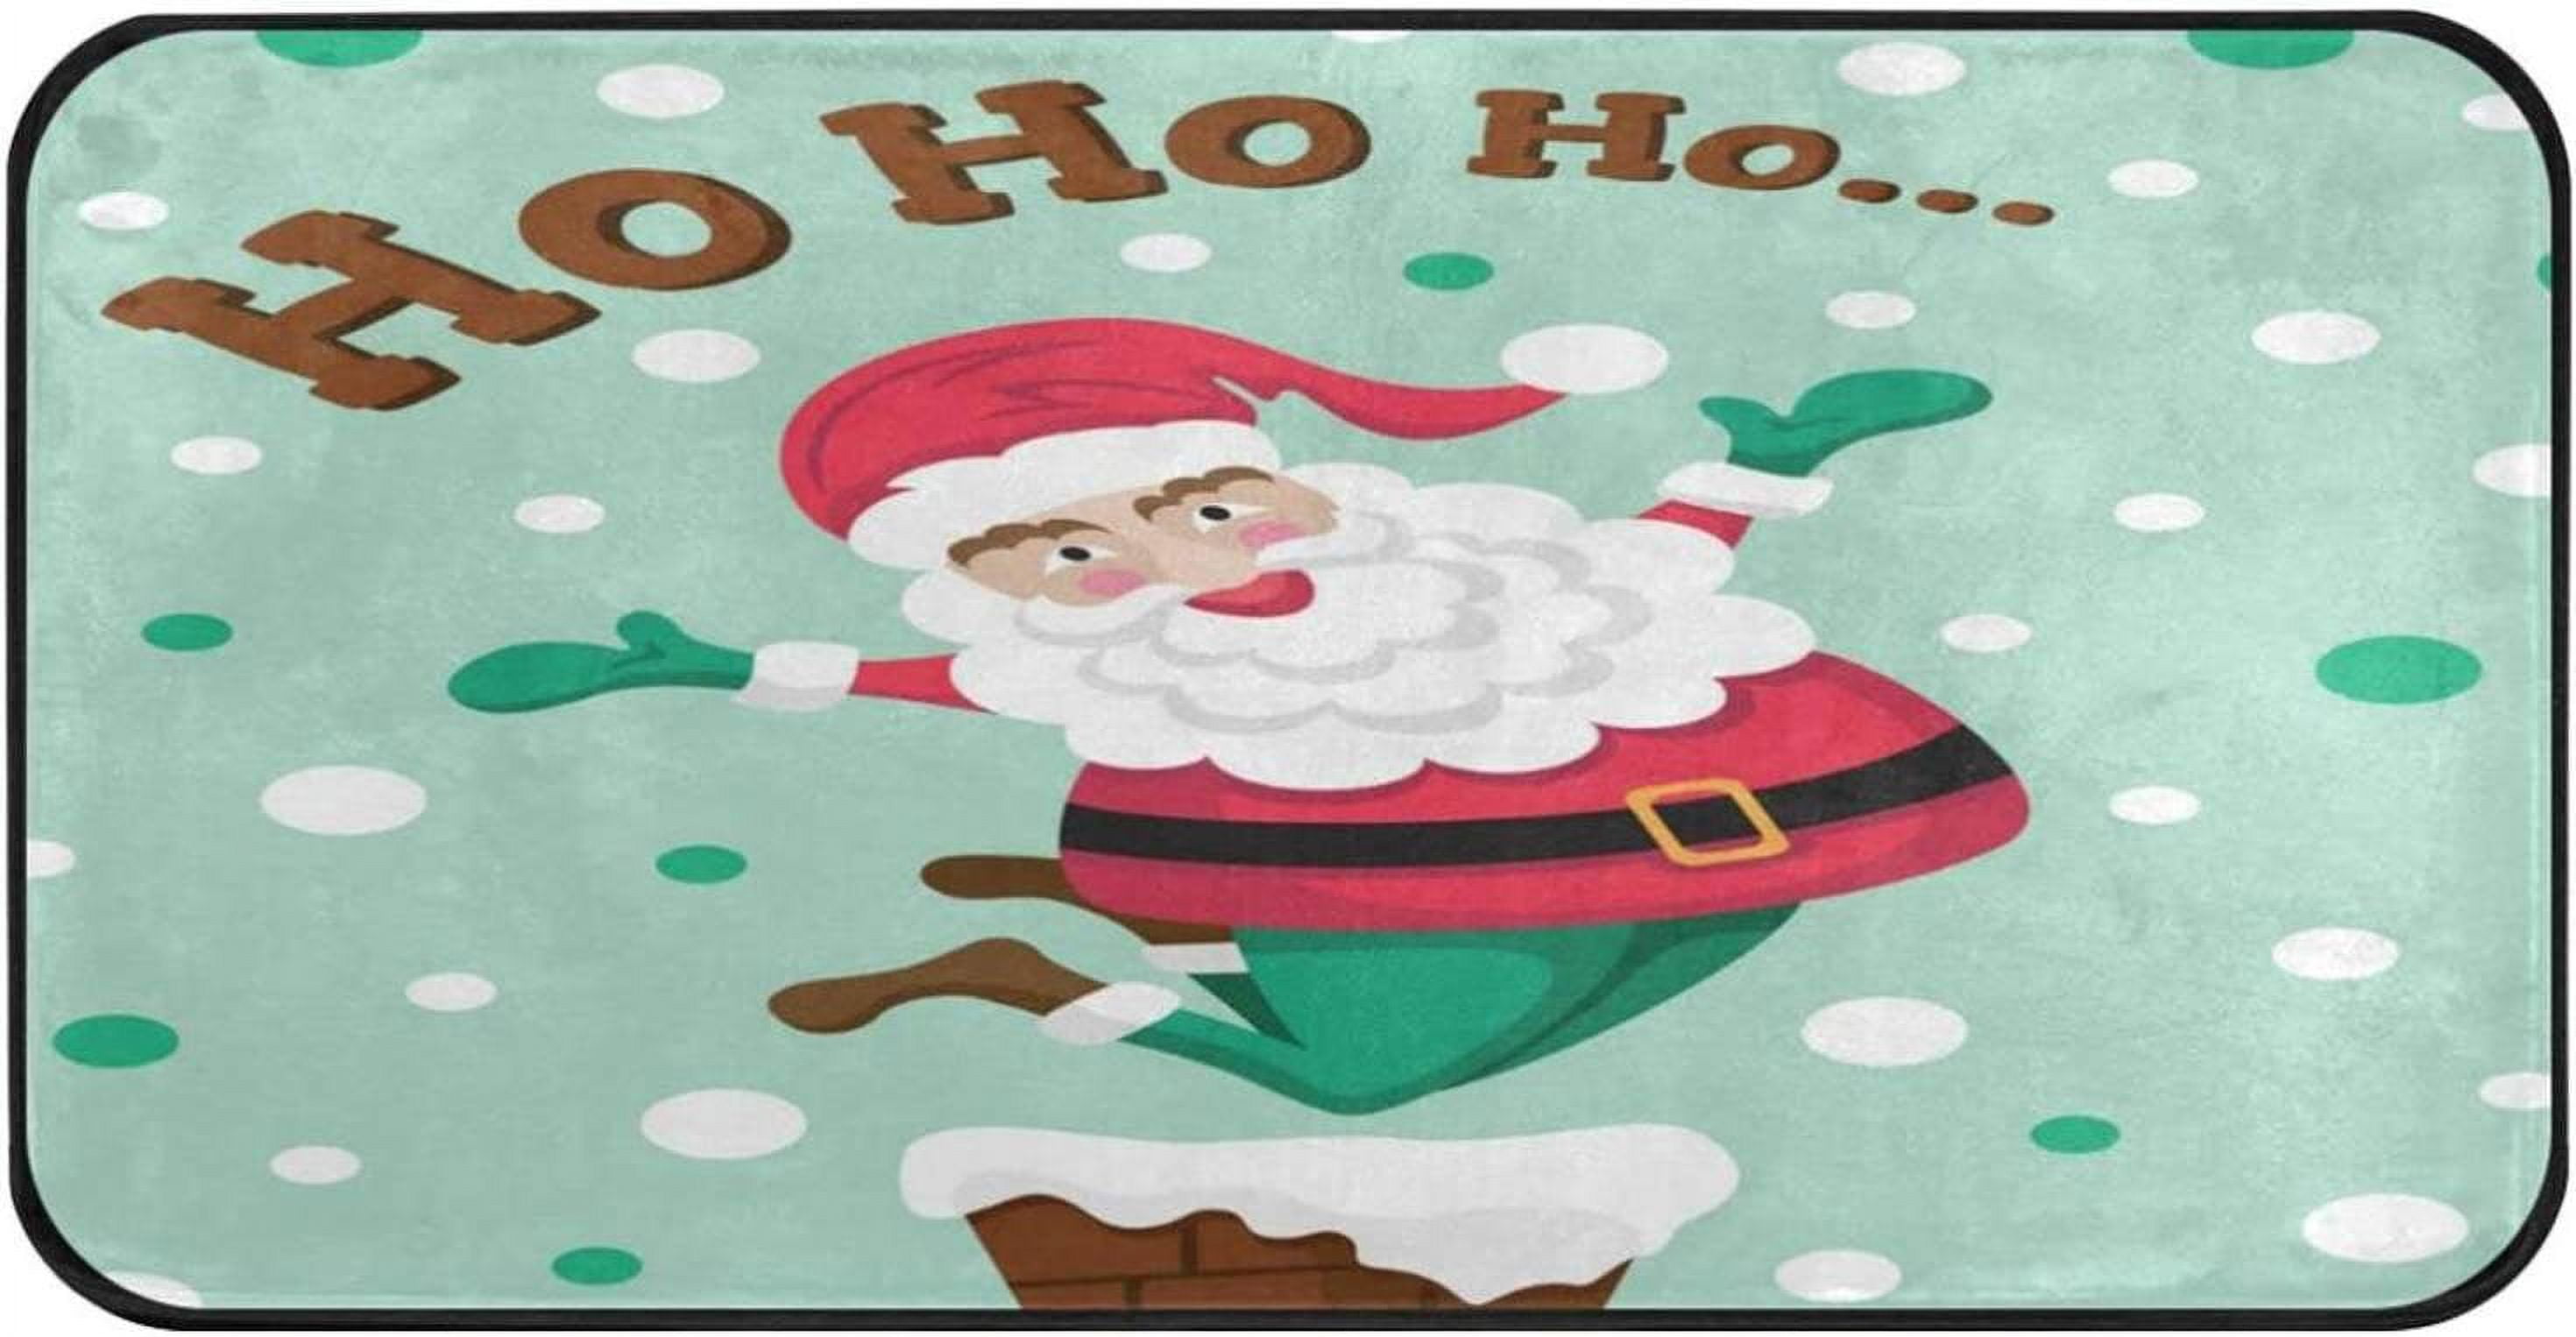  Christmas Santa Claus Hohoho Kitchen Sponges Winter